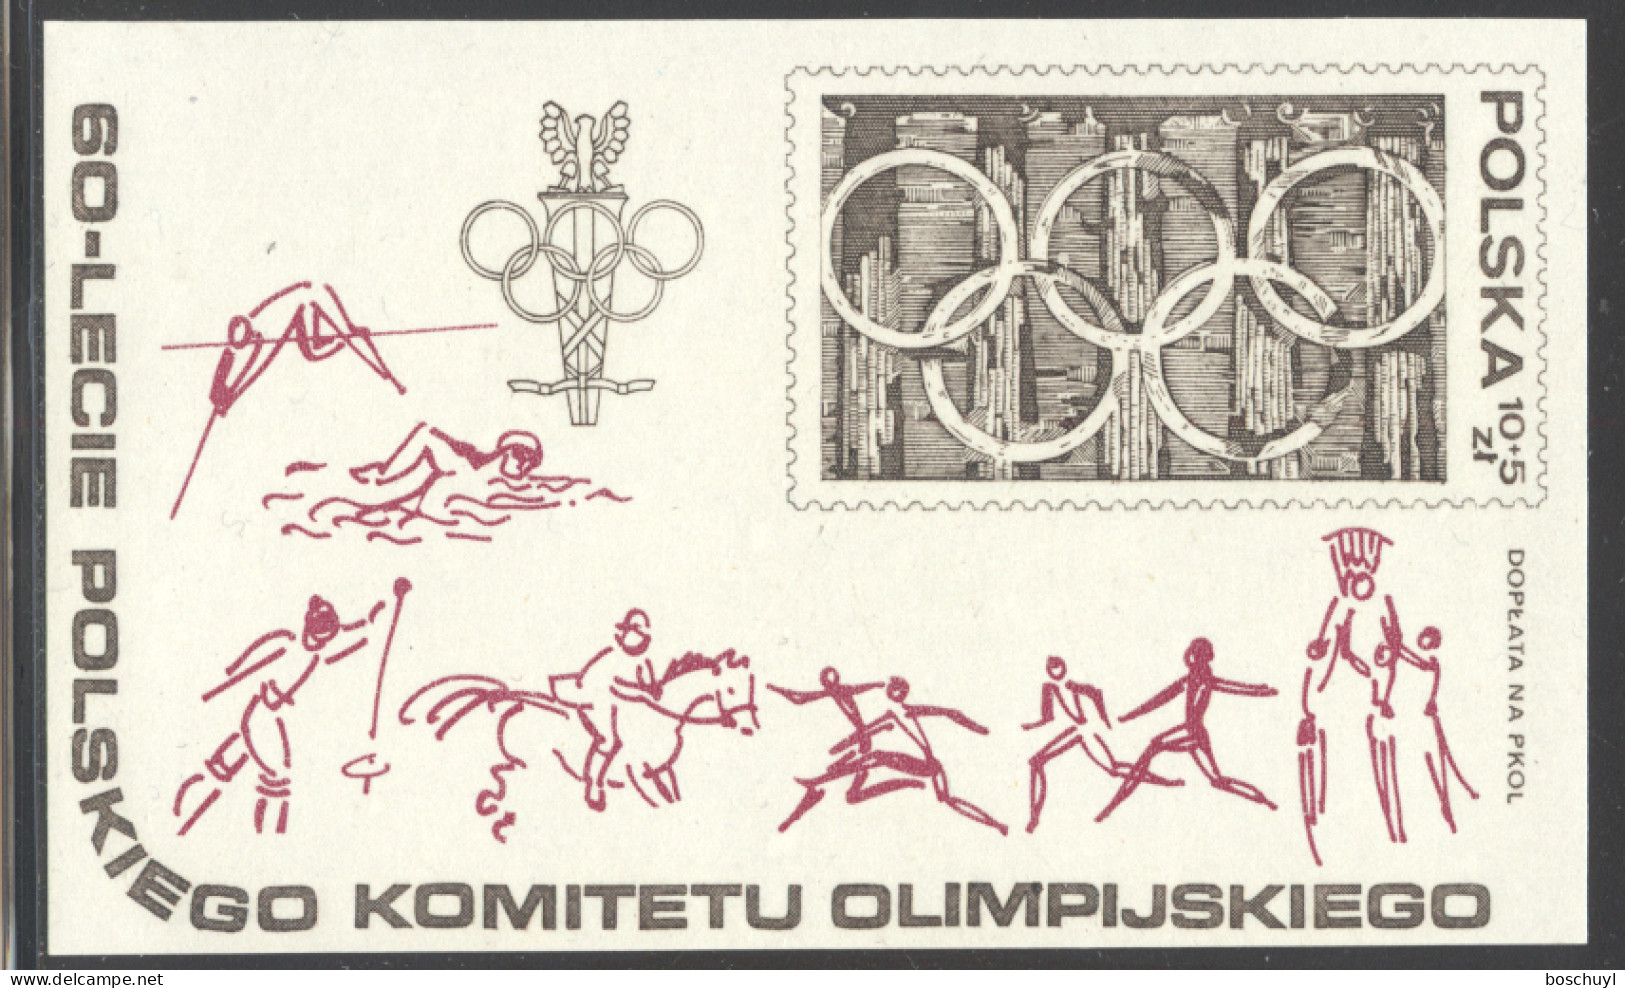 Poland, 1979, Olympic Games, Polish Olympic Committee, Sports, MNH, Michel Block 74 - Ongebruikt